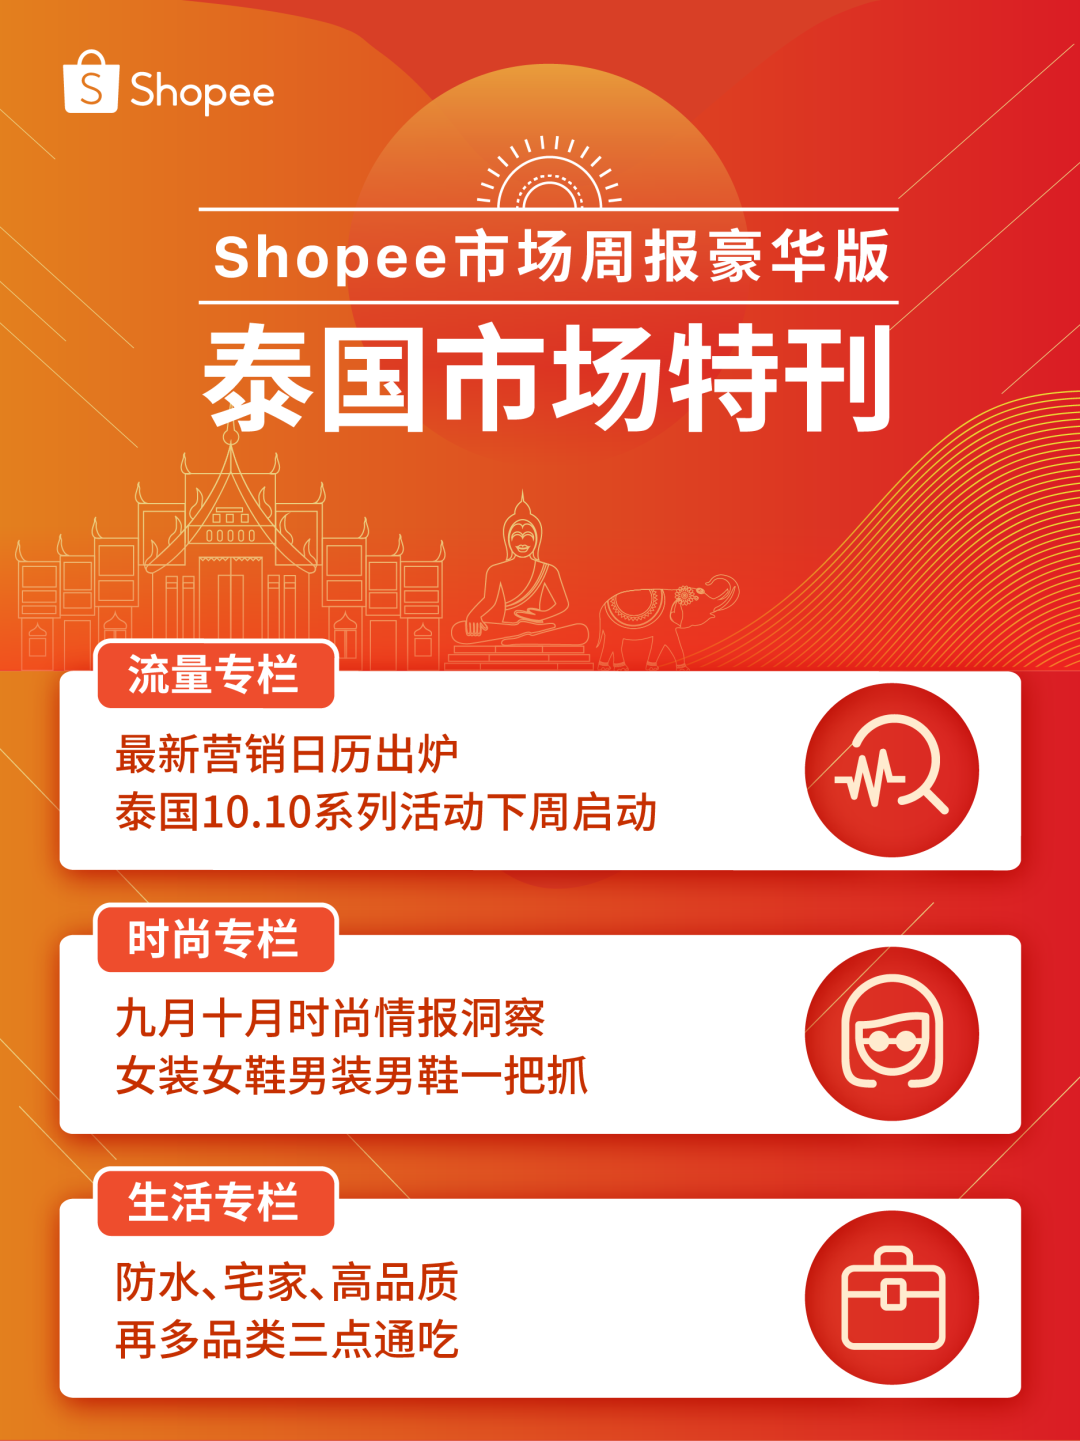 Shopee时尚&生活东南亚雨季热搜预测, 泰国跨境专属营销日历先发!